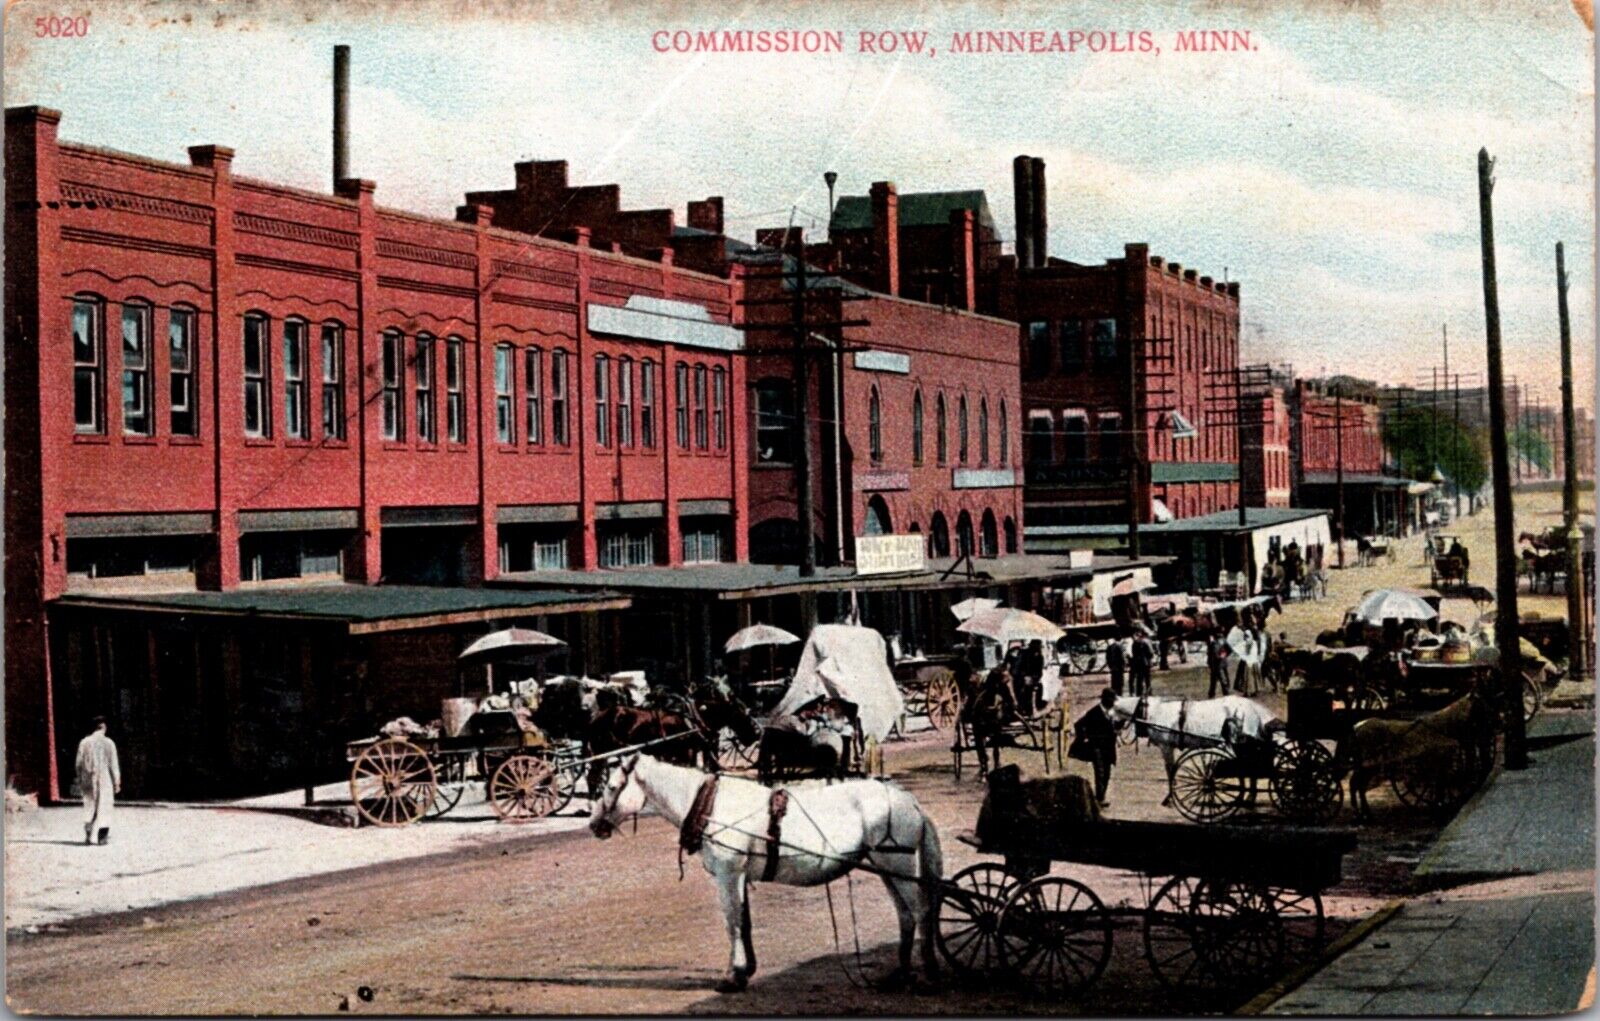 Postcard Commission Row in Minneapolis, Minnesota